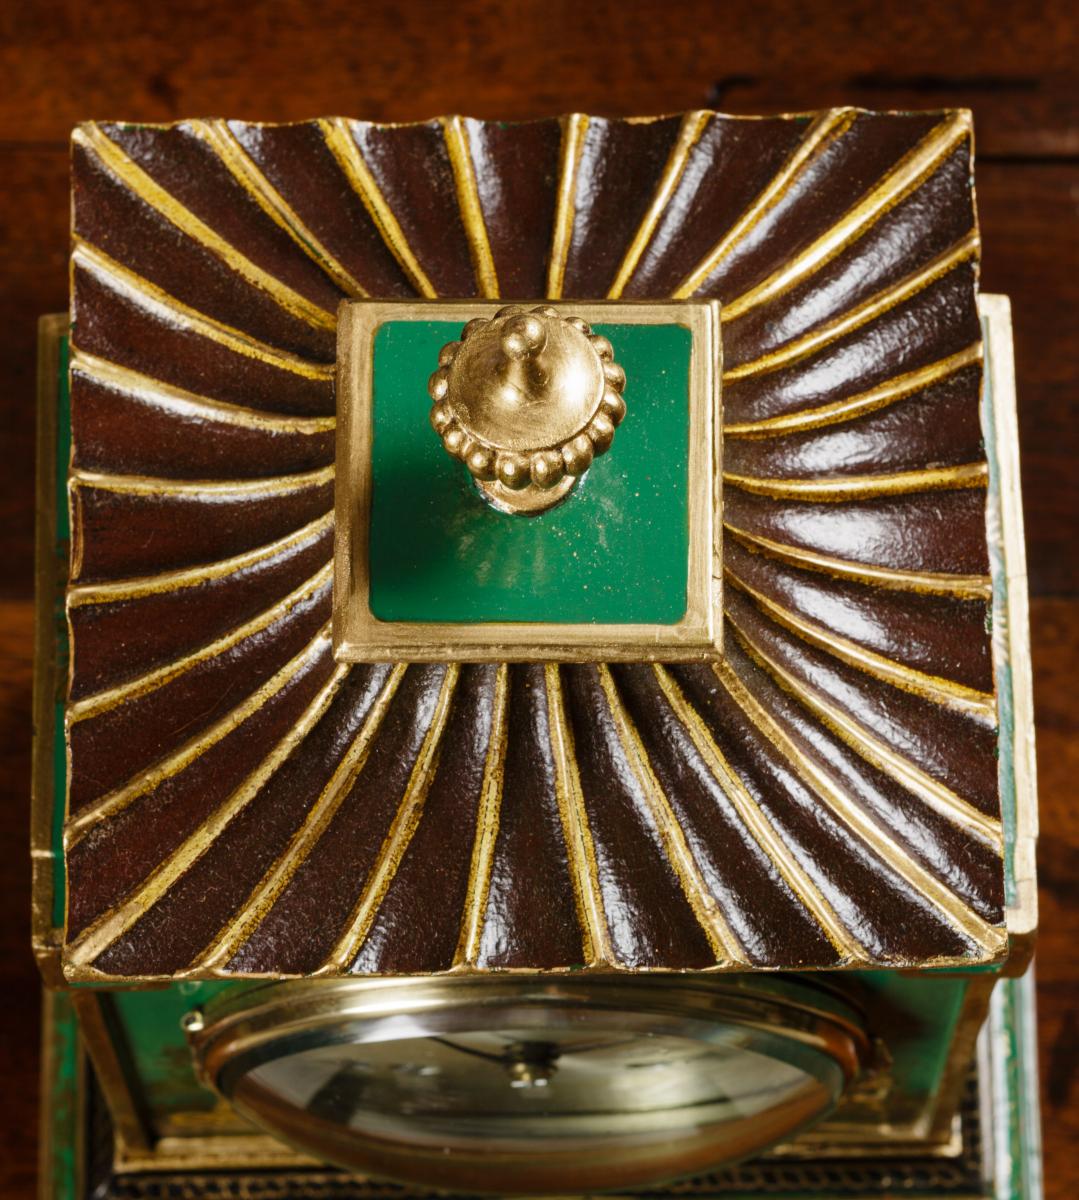 Edwardian Chinoiserie Decorated Mantel Clock signed Mappin & Webb